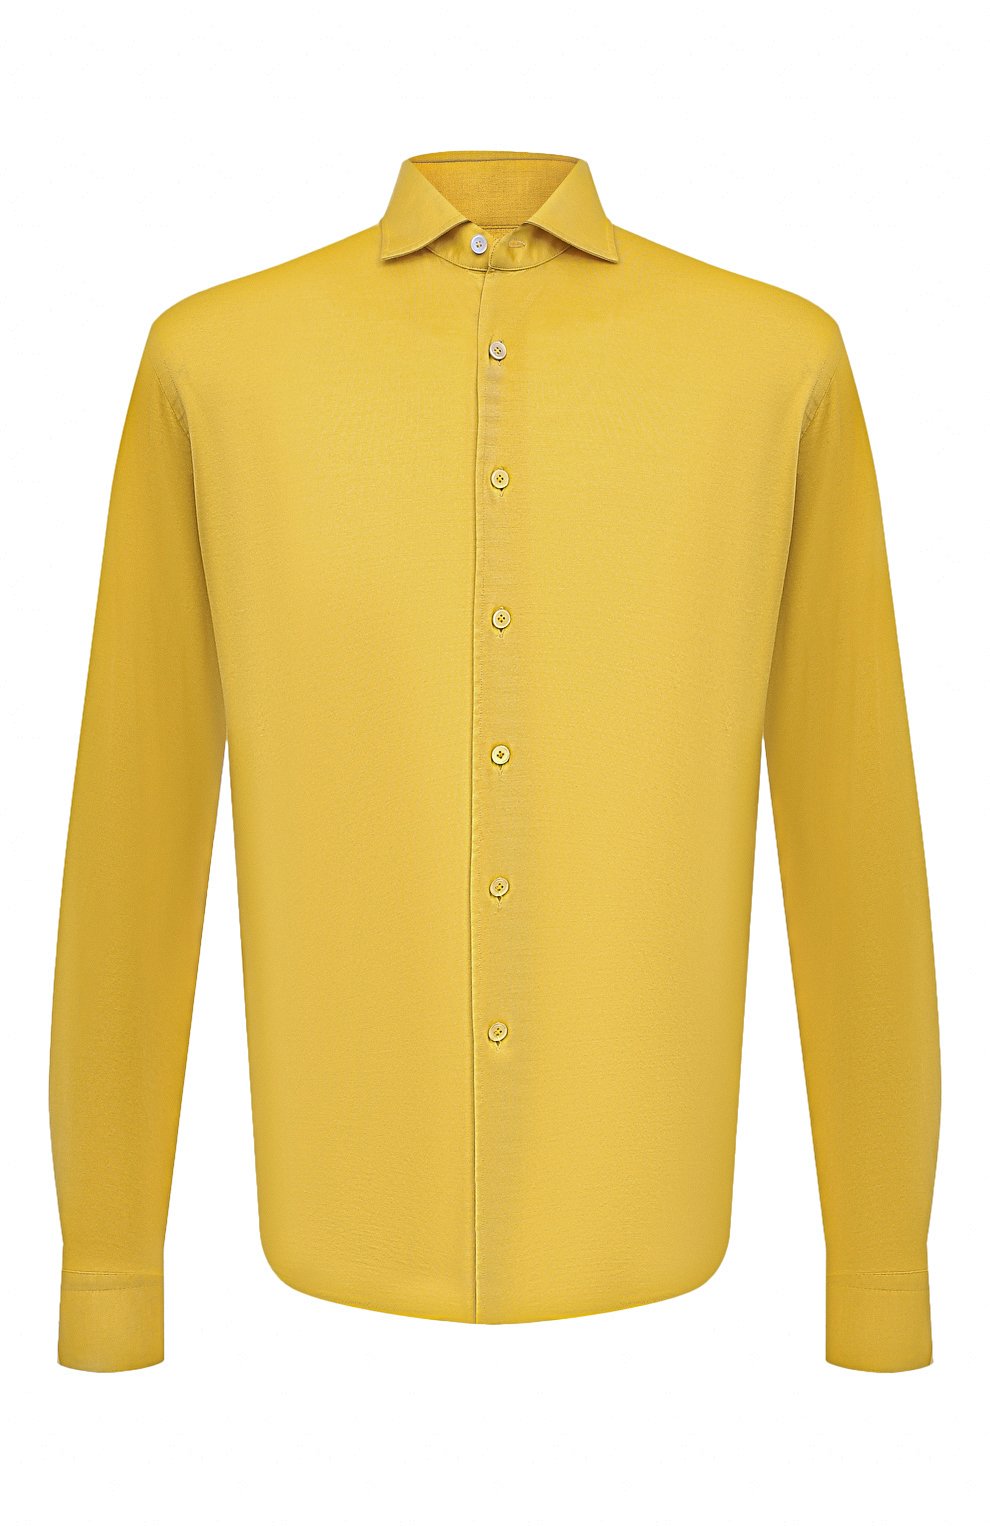 Фото Мужская желтая хлопковая рубашка ALESSANDRO GHERARDI, арт. JERSEY/7077 Италия JERSEY/7077 